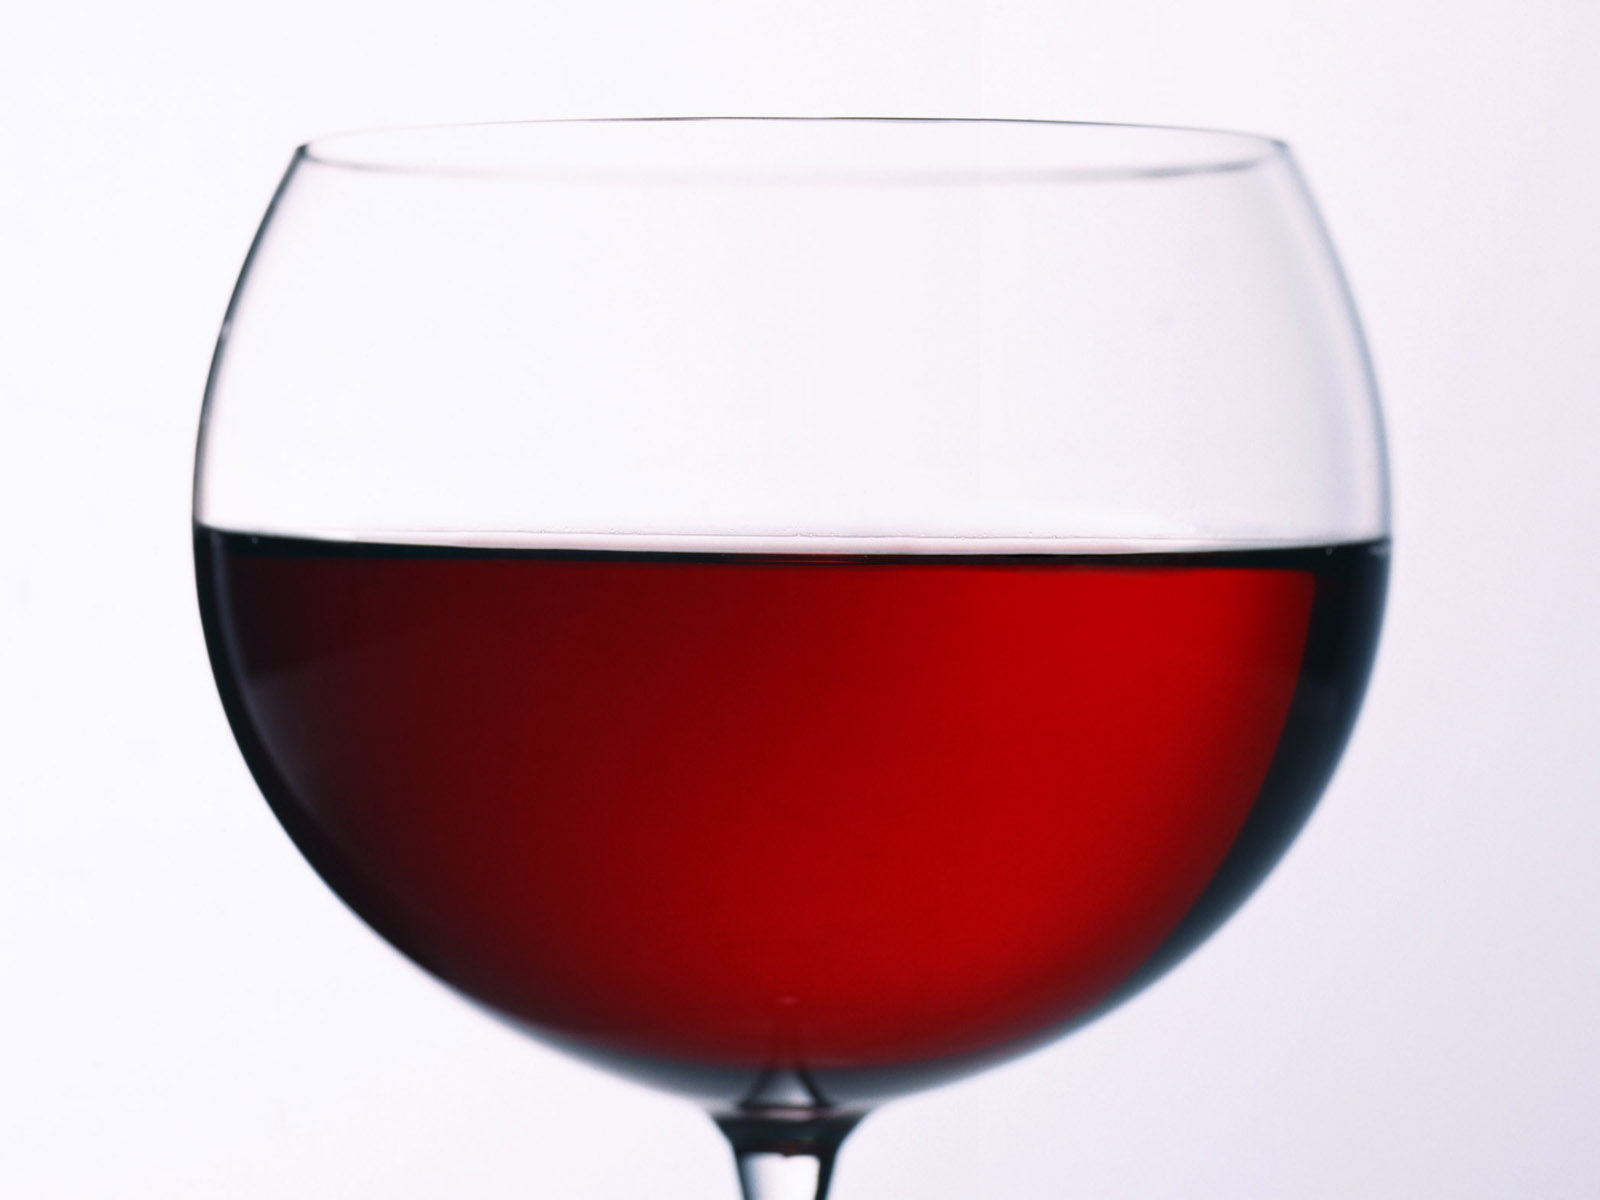 5 бокал вина. Бокал вина. Бокалы для вина широкие. Бокалы для красного вина большие. Большой бокал для вина.